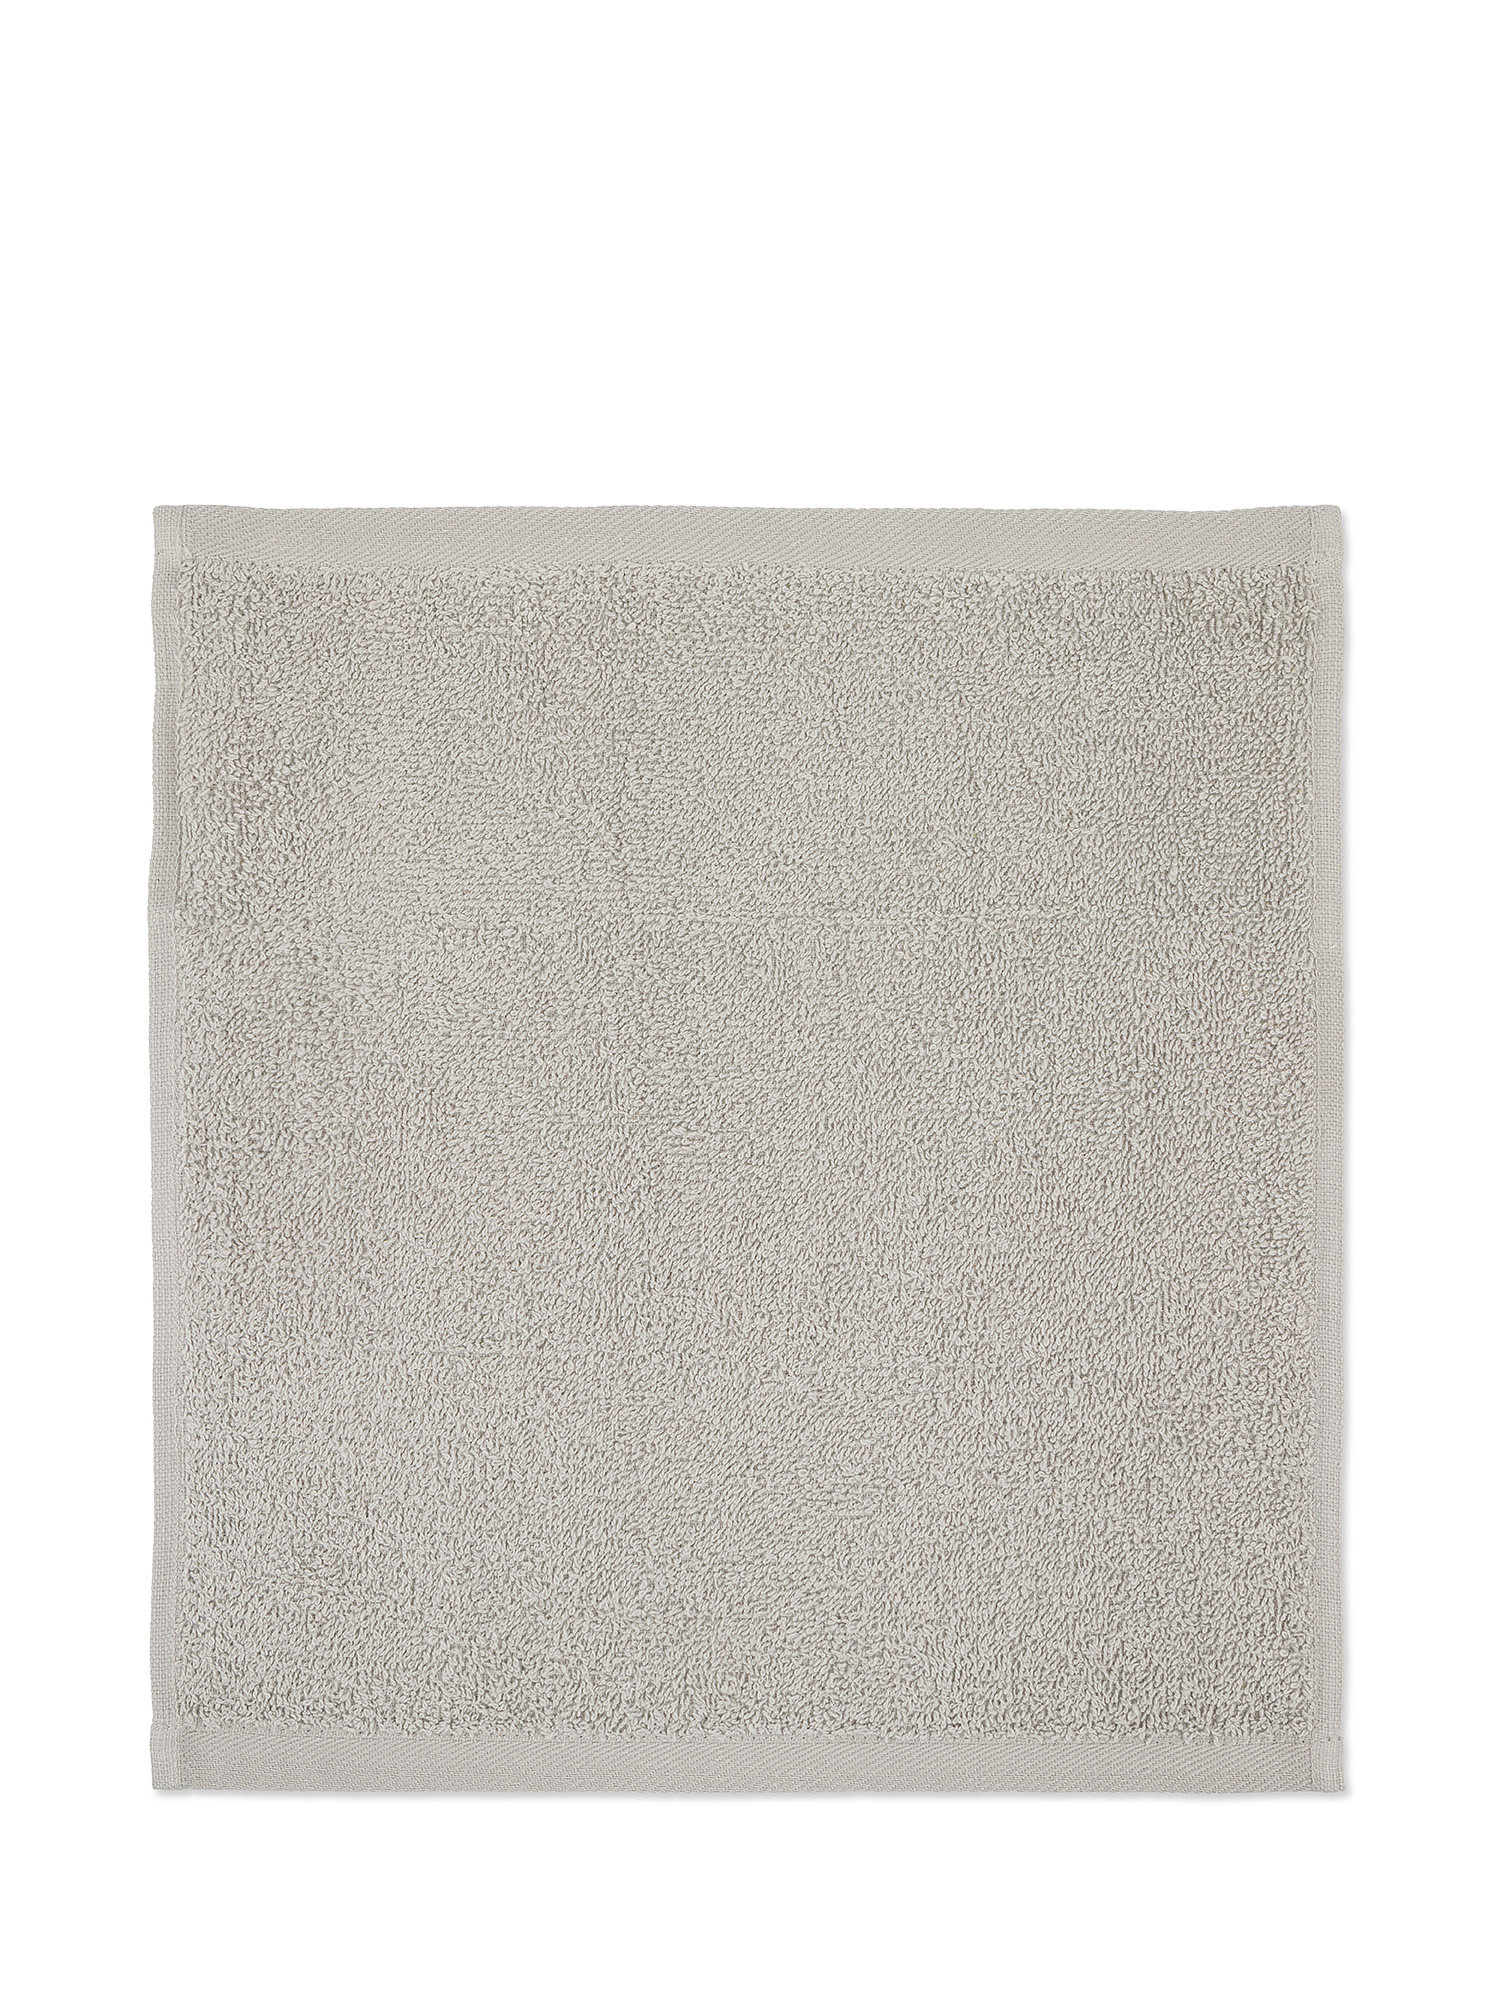 Thermae basket of 4 solid color cotton washcloths, Grey, large image number 2